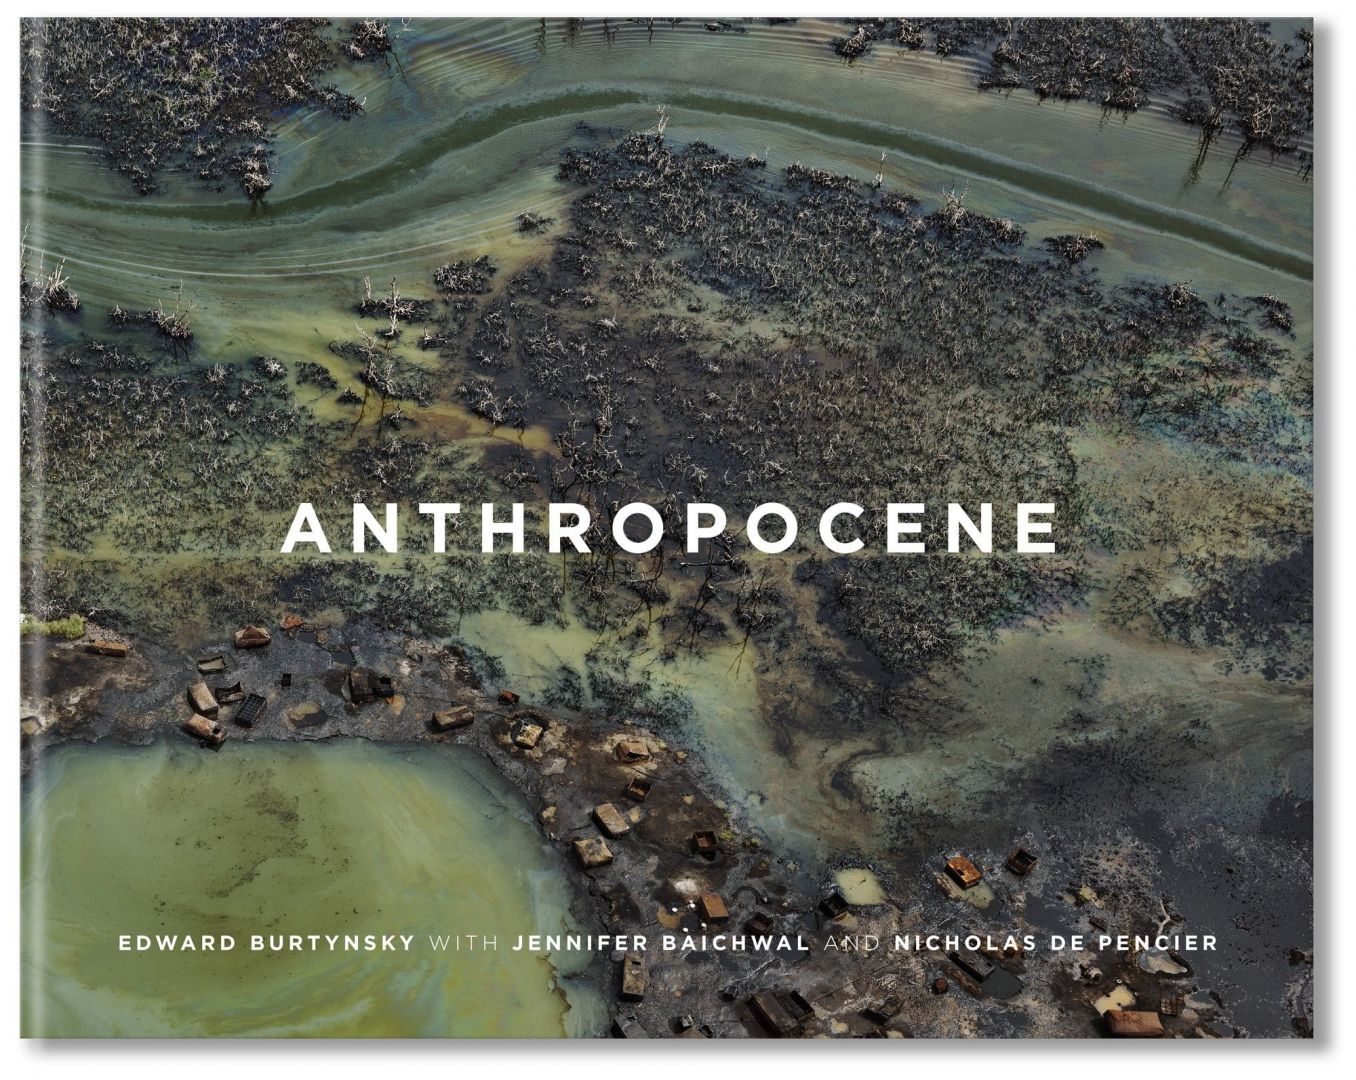 Edward Burtynsky – Anthropocene